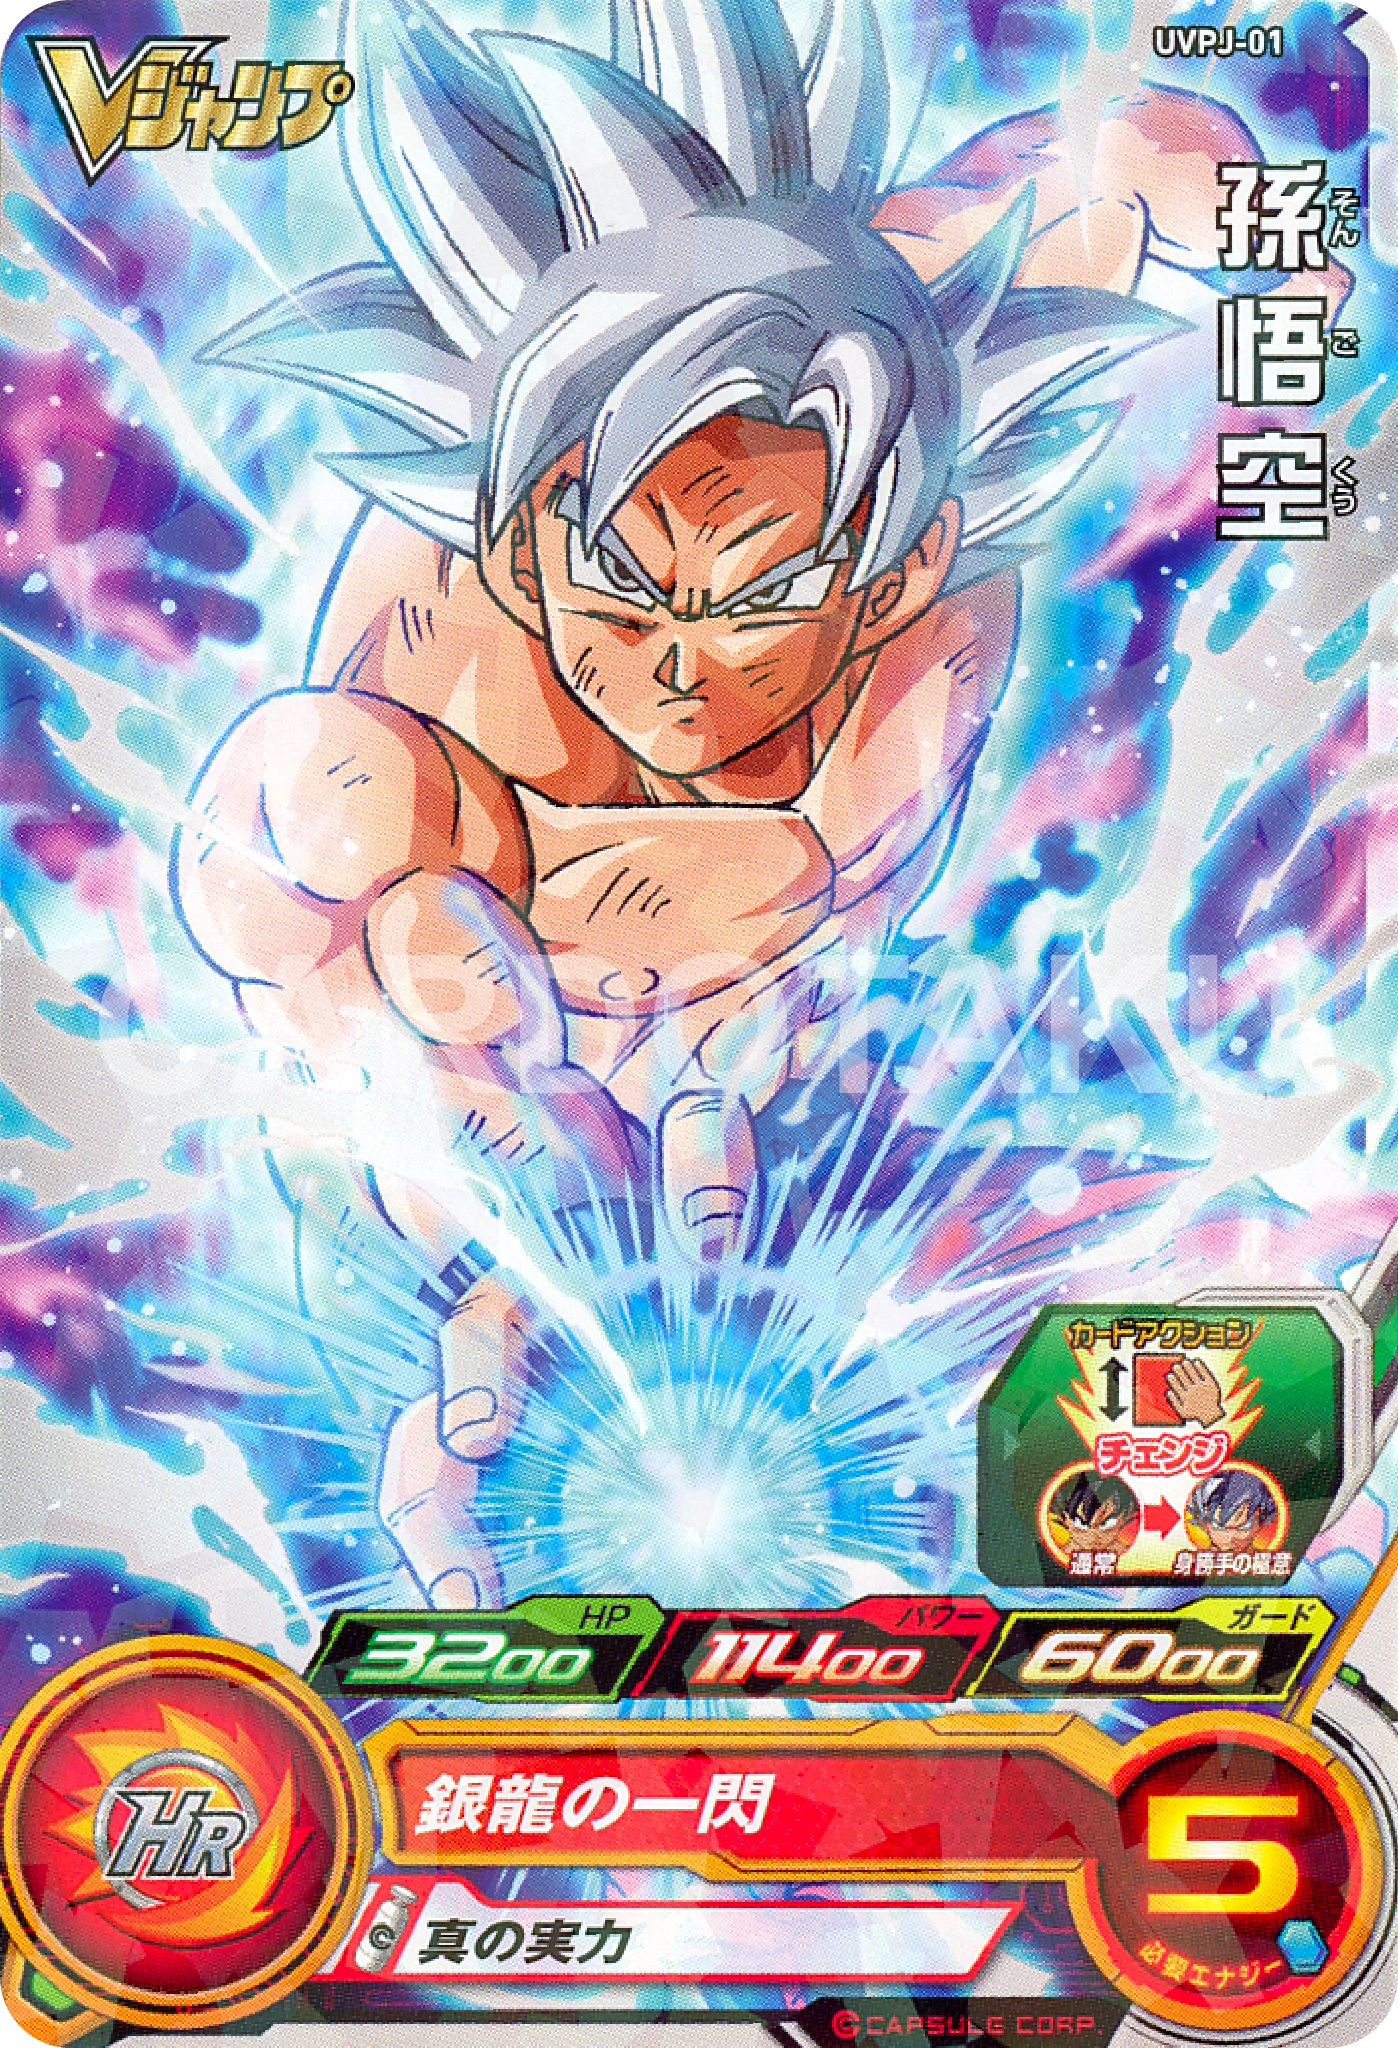 SUPER DRAGON BALL HEROES UVPJ-01 Son Goku Migatte no Gokui Ultra Instinct